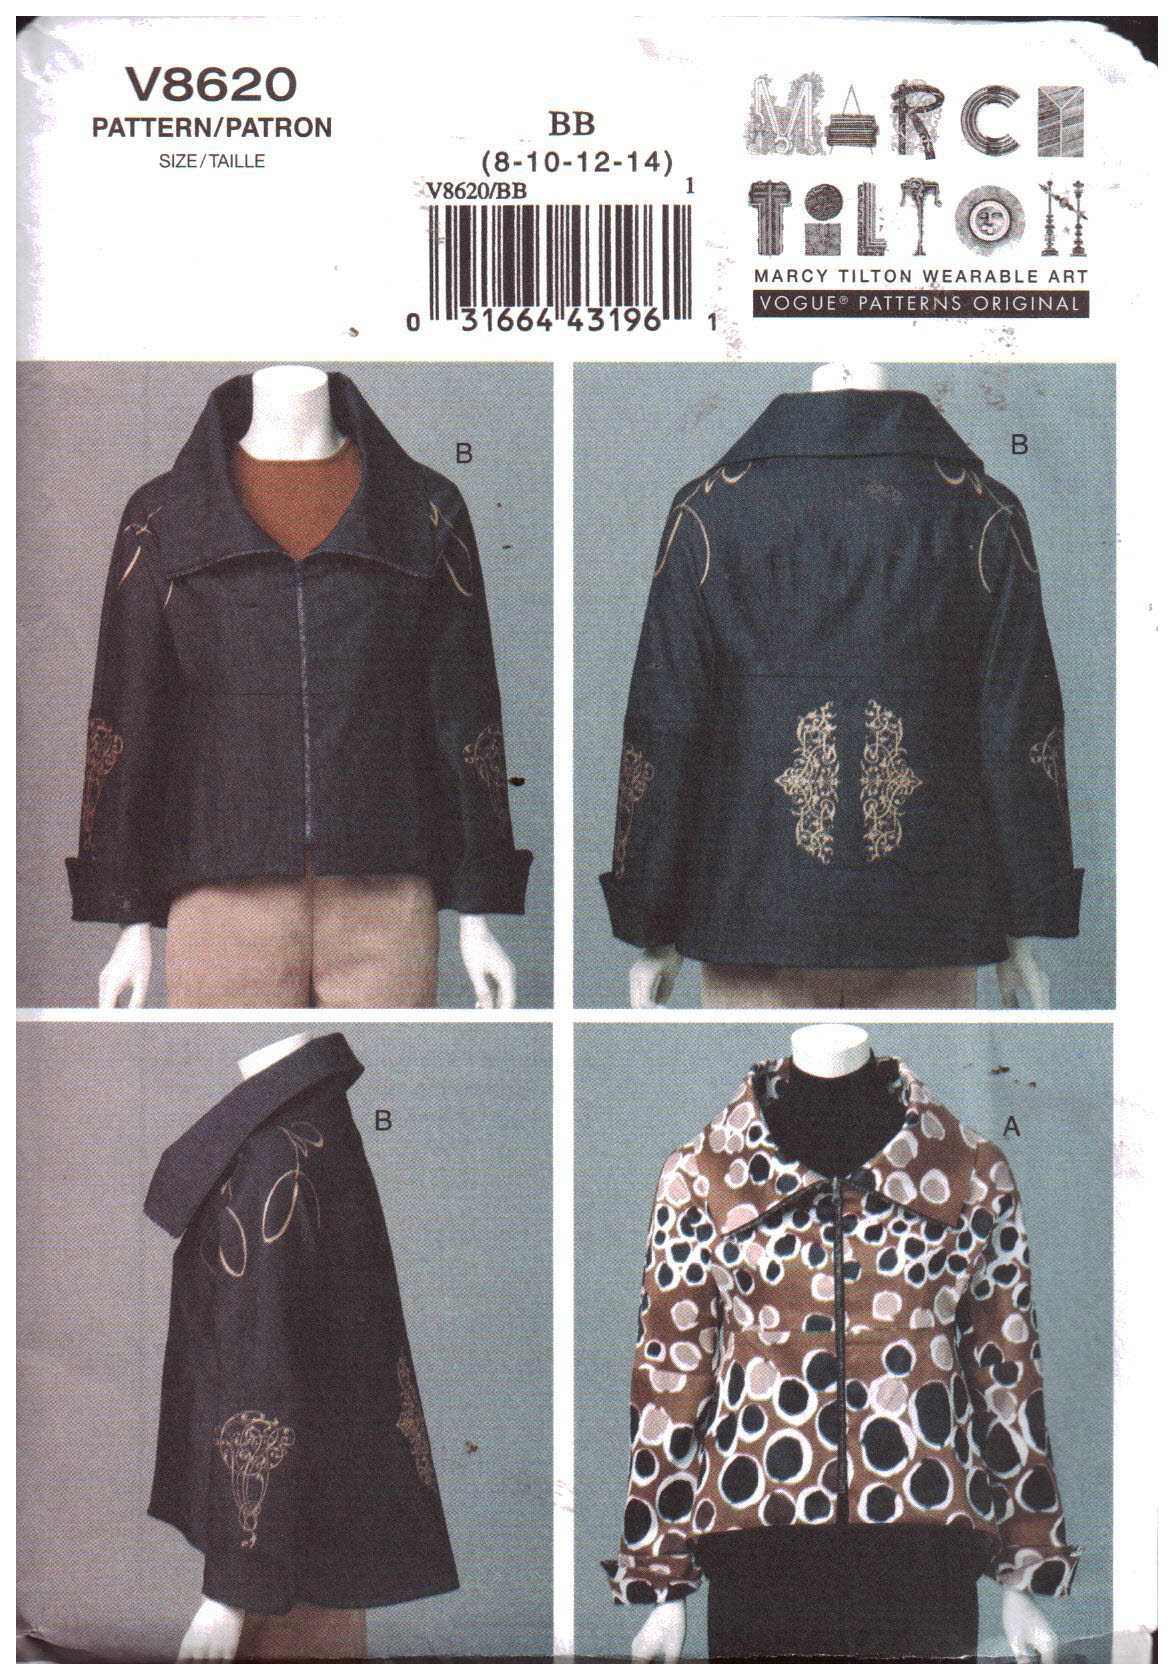 Vogue V8620 Jacket by March Tilton Size: BB 8-10-12-14 Uncut Sewing Pattern